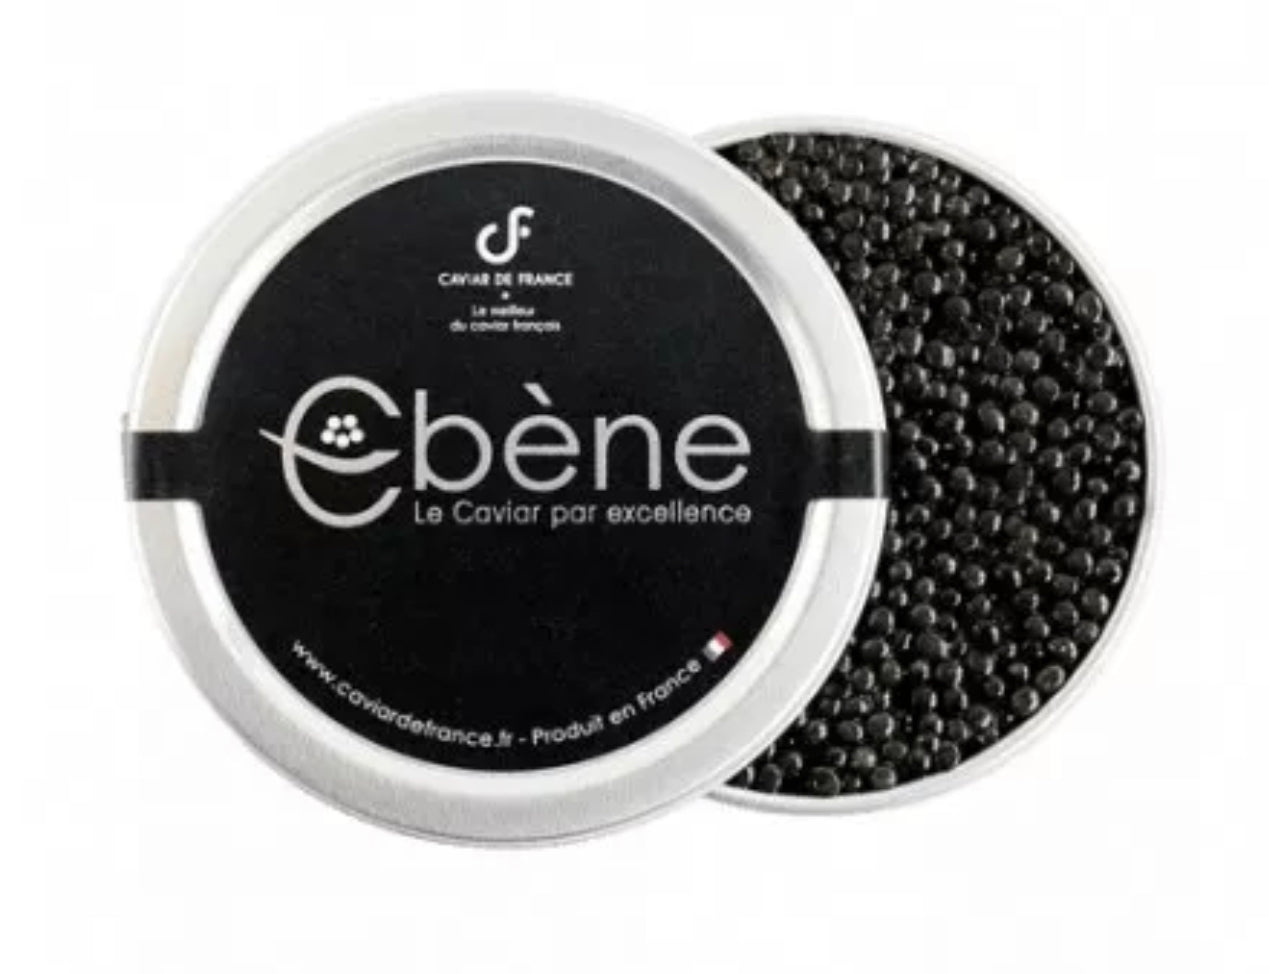 Caviar de France Baeri "Ébène" - 30g